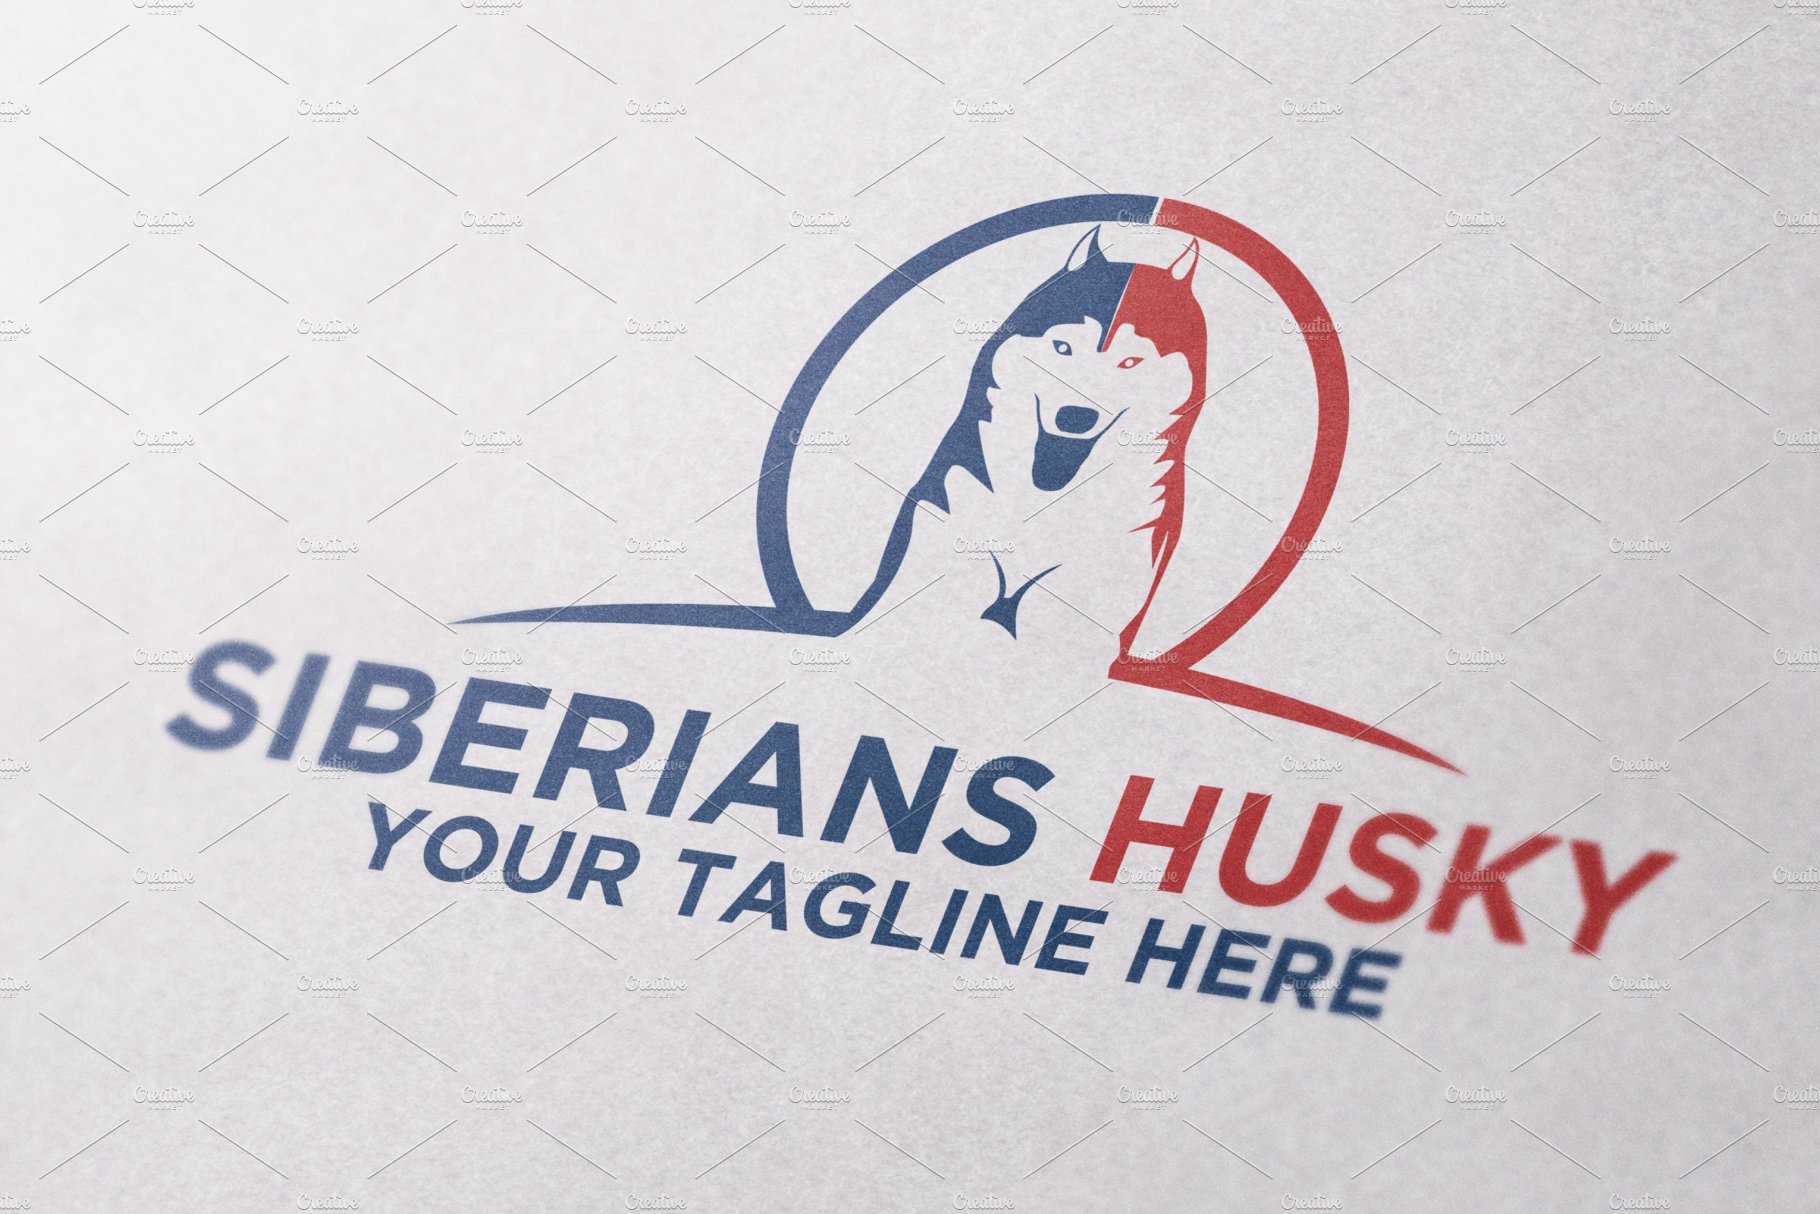 Siberian Husky | Dog Logo Template cover image.